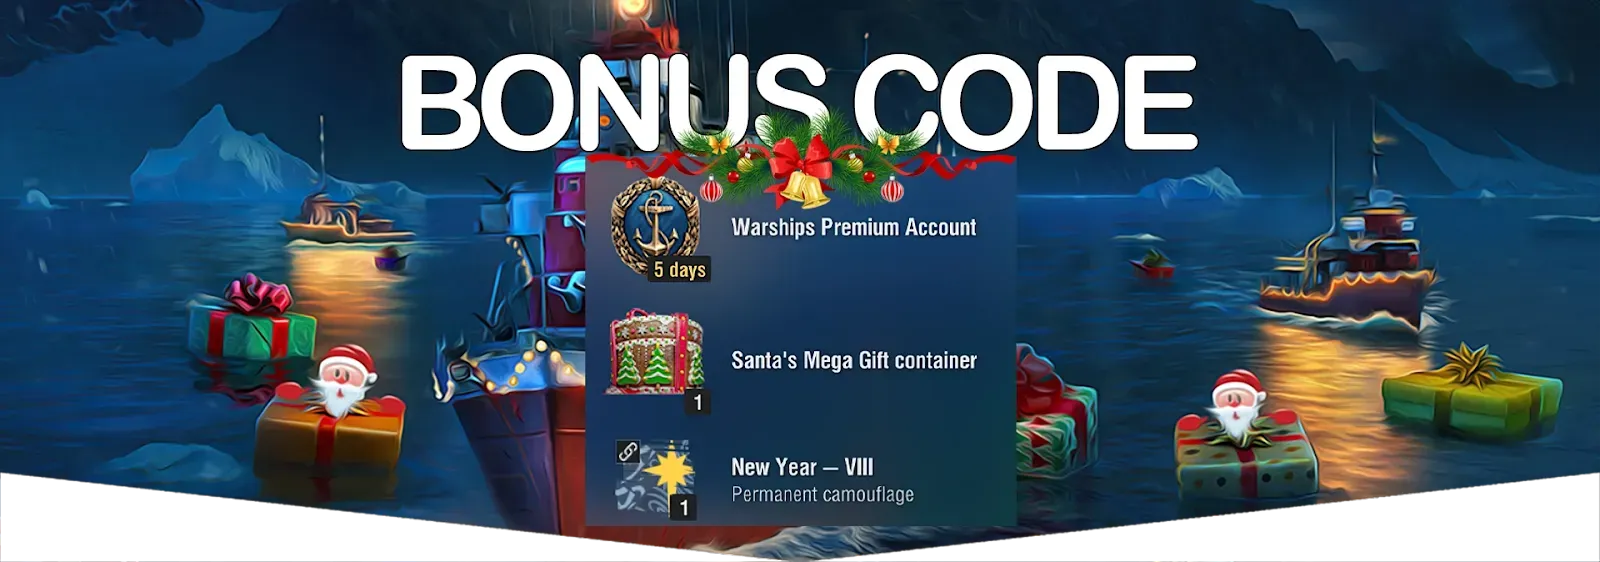 Image of Bonus Code header banner